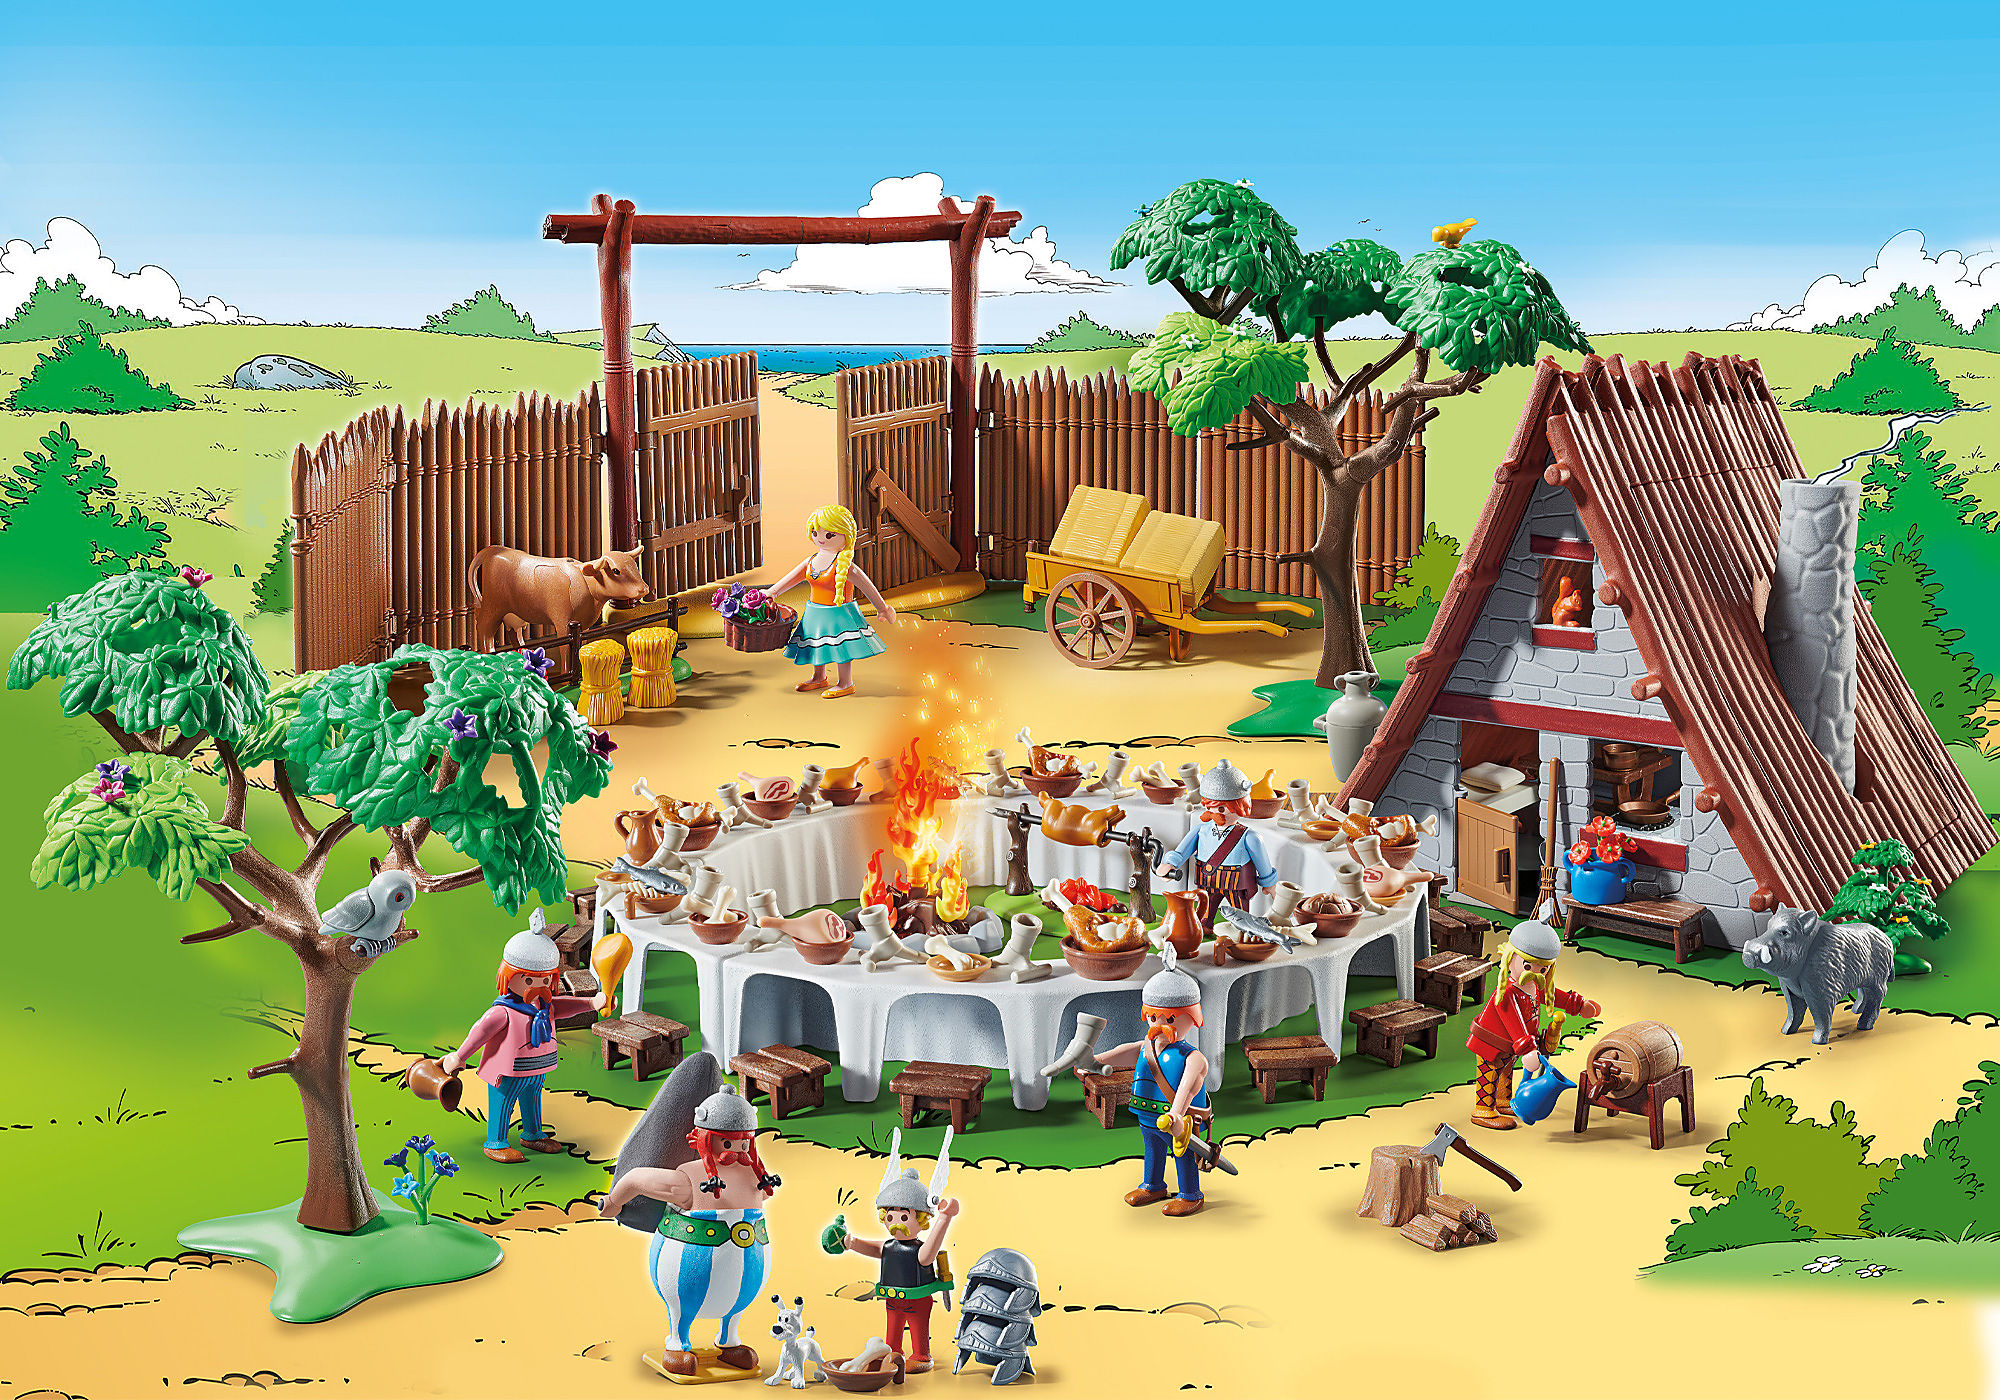 Playmobil France sur LinkedIn : #playmobil #asterix #obelix